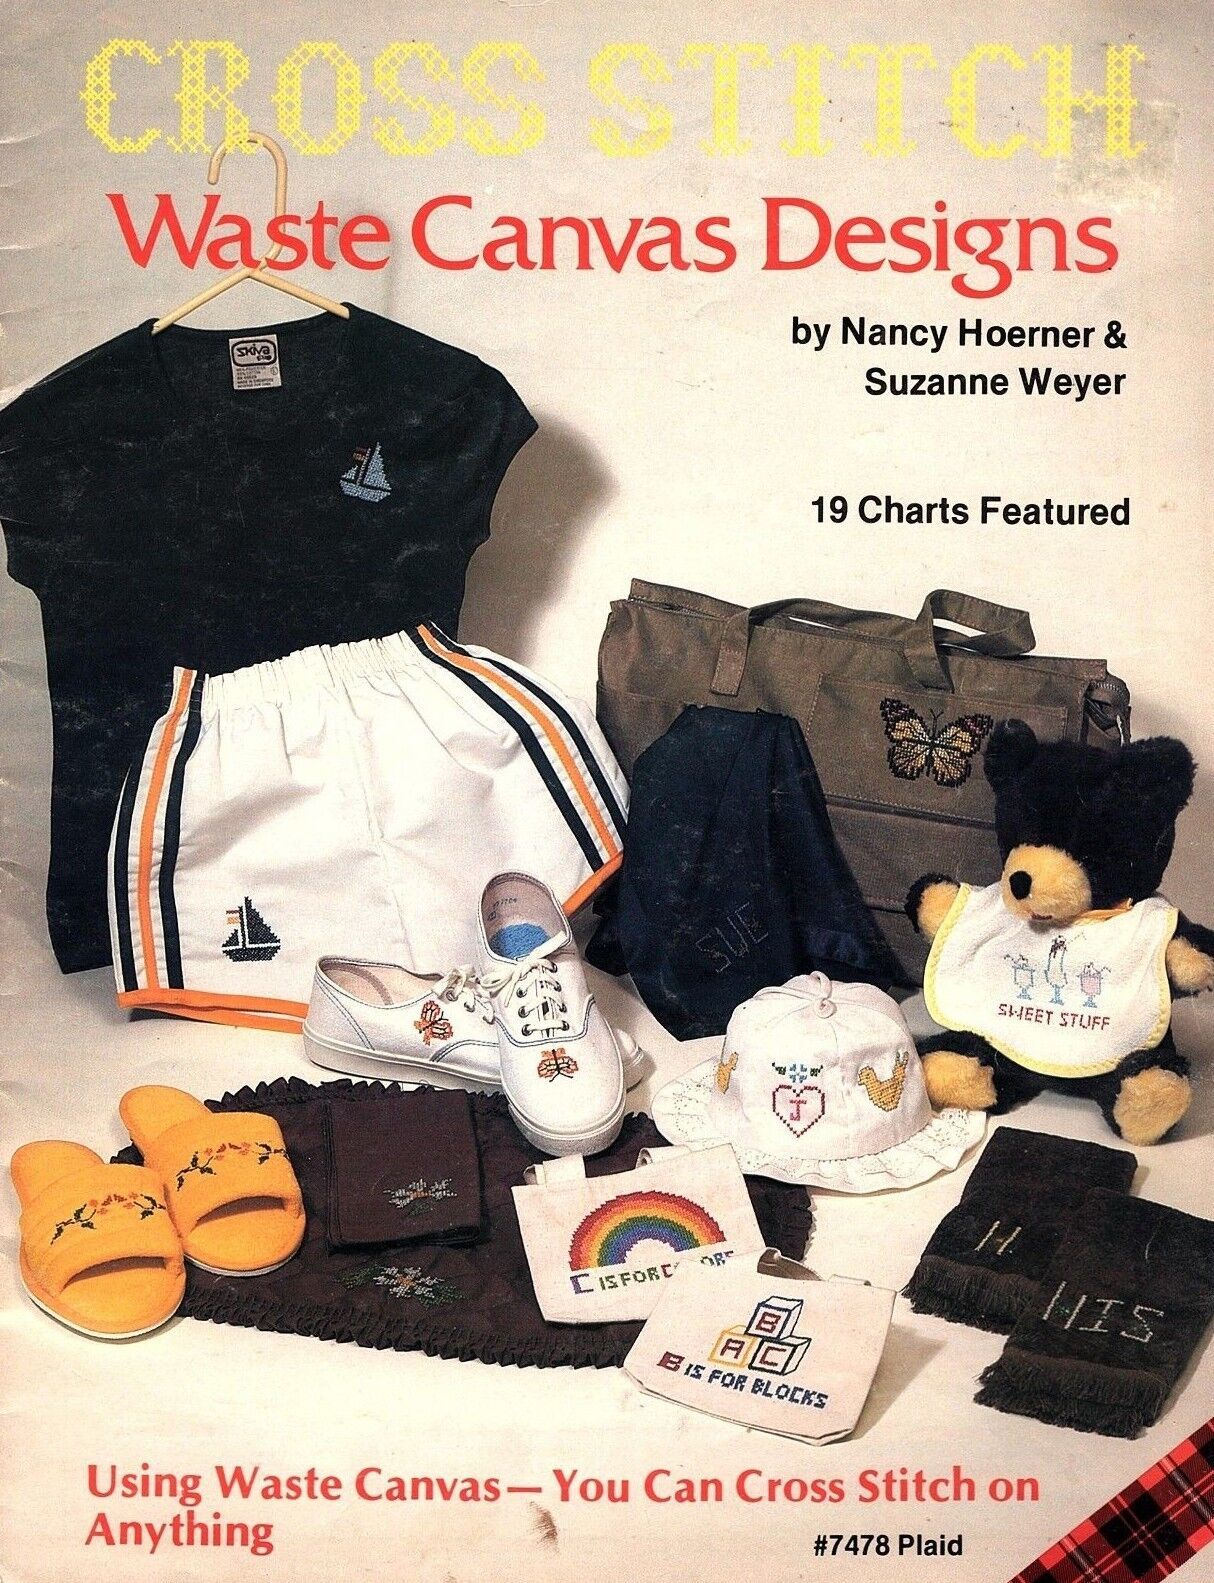 Cross Stitch Waste Canvas Designs 19 Vintage Charts Featured Plaid # 7478 - $3.45